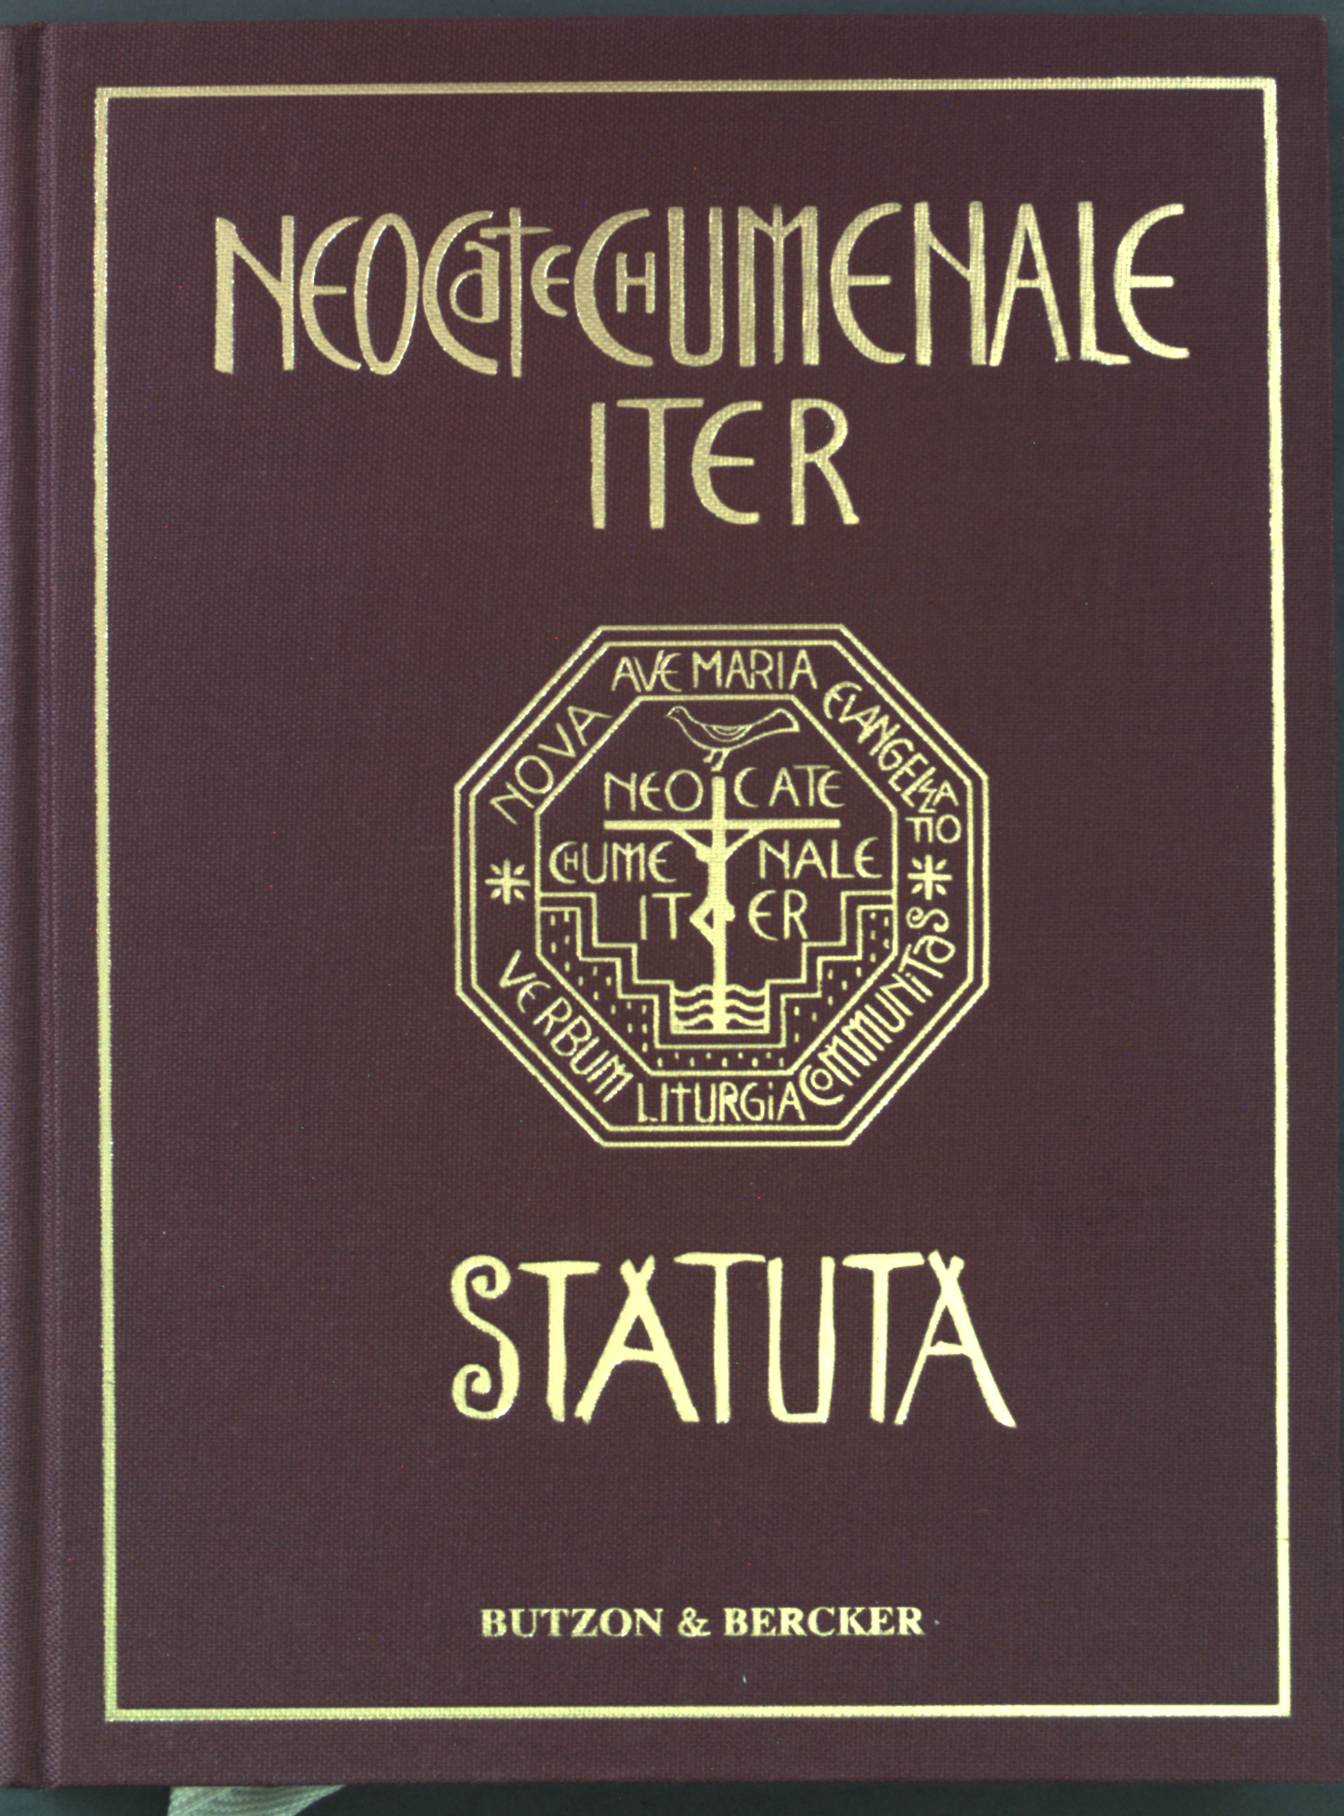 Neocatechumenale iter : statuta = Der neokatechumenale Weg. Diözesanes Neokatechumenales Zentrum e. V. 1. Aufl.